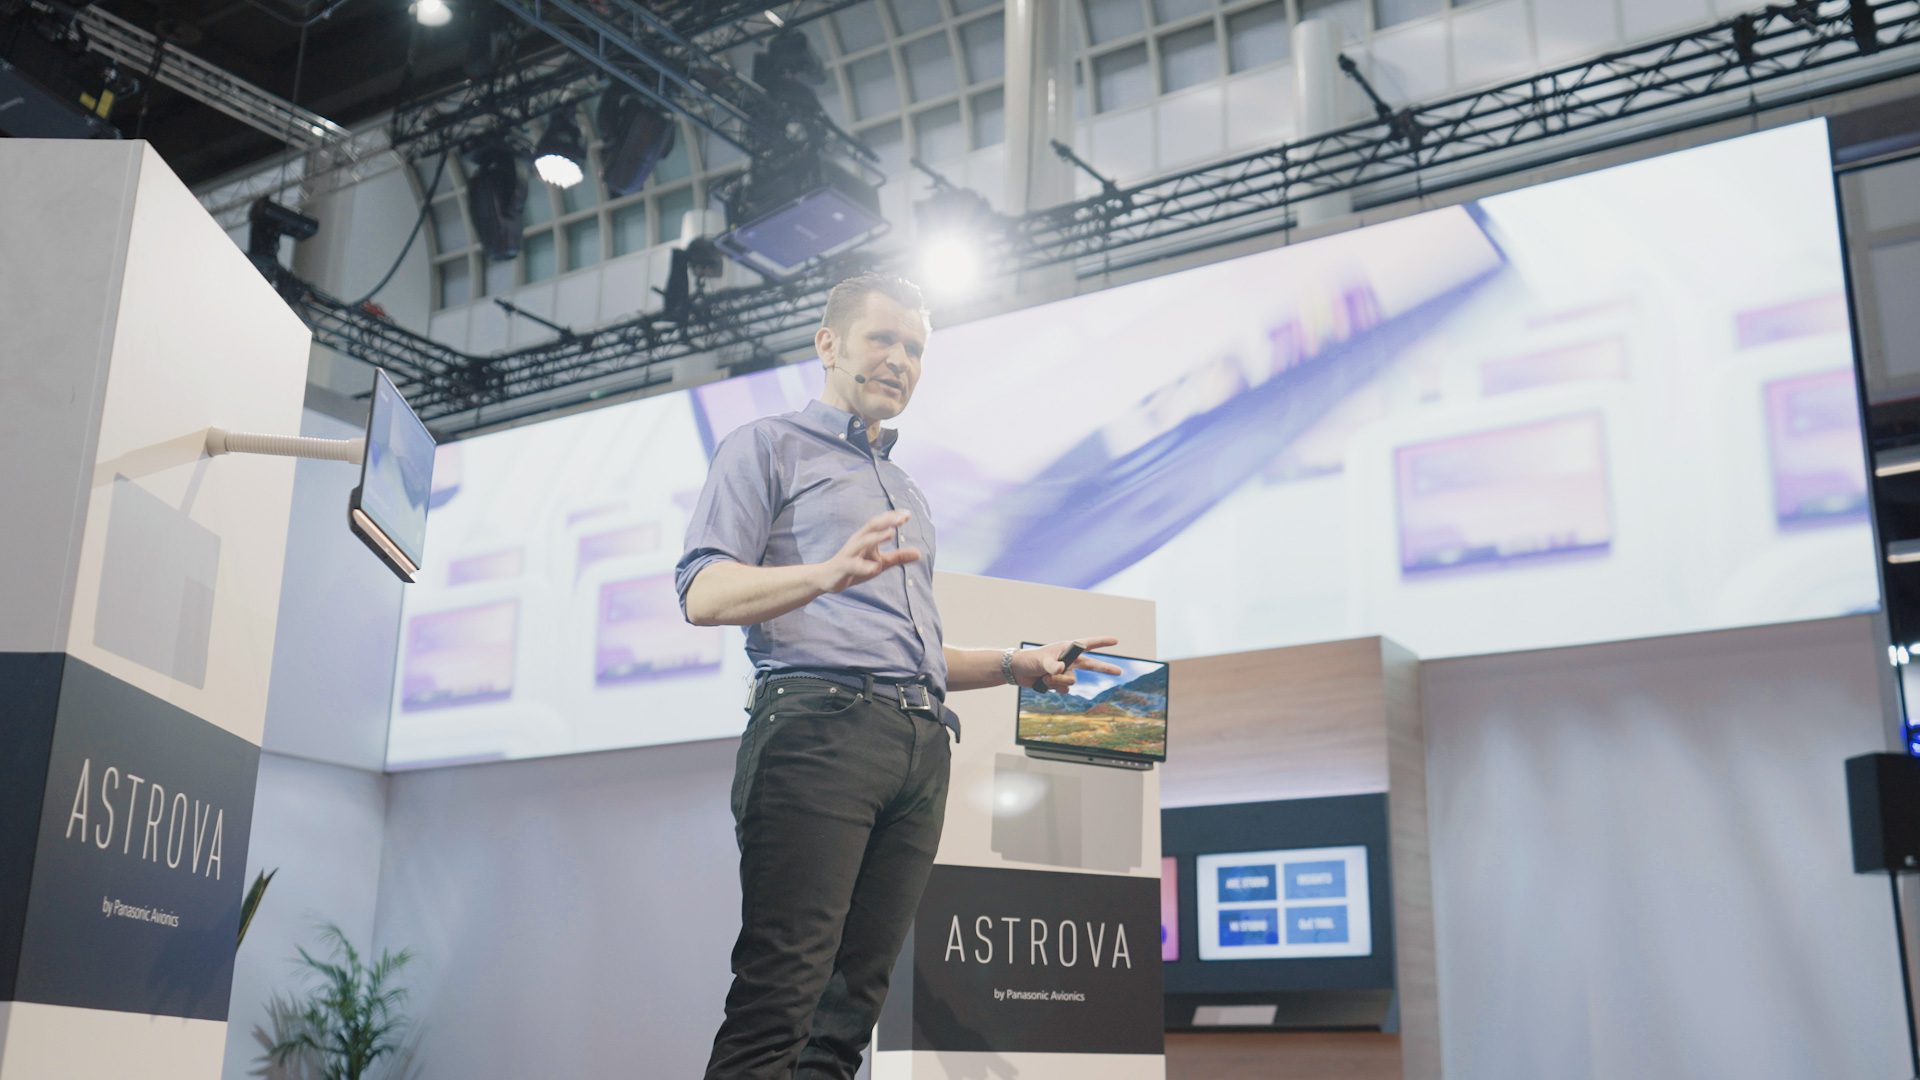 Andy Mason, Productmanager von Panasonic Avionics stellt Produkt Astrova vor